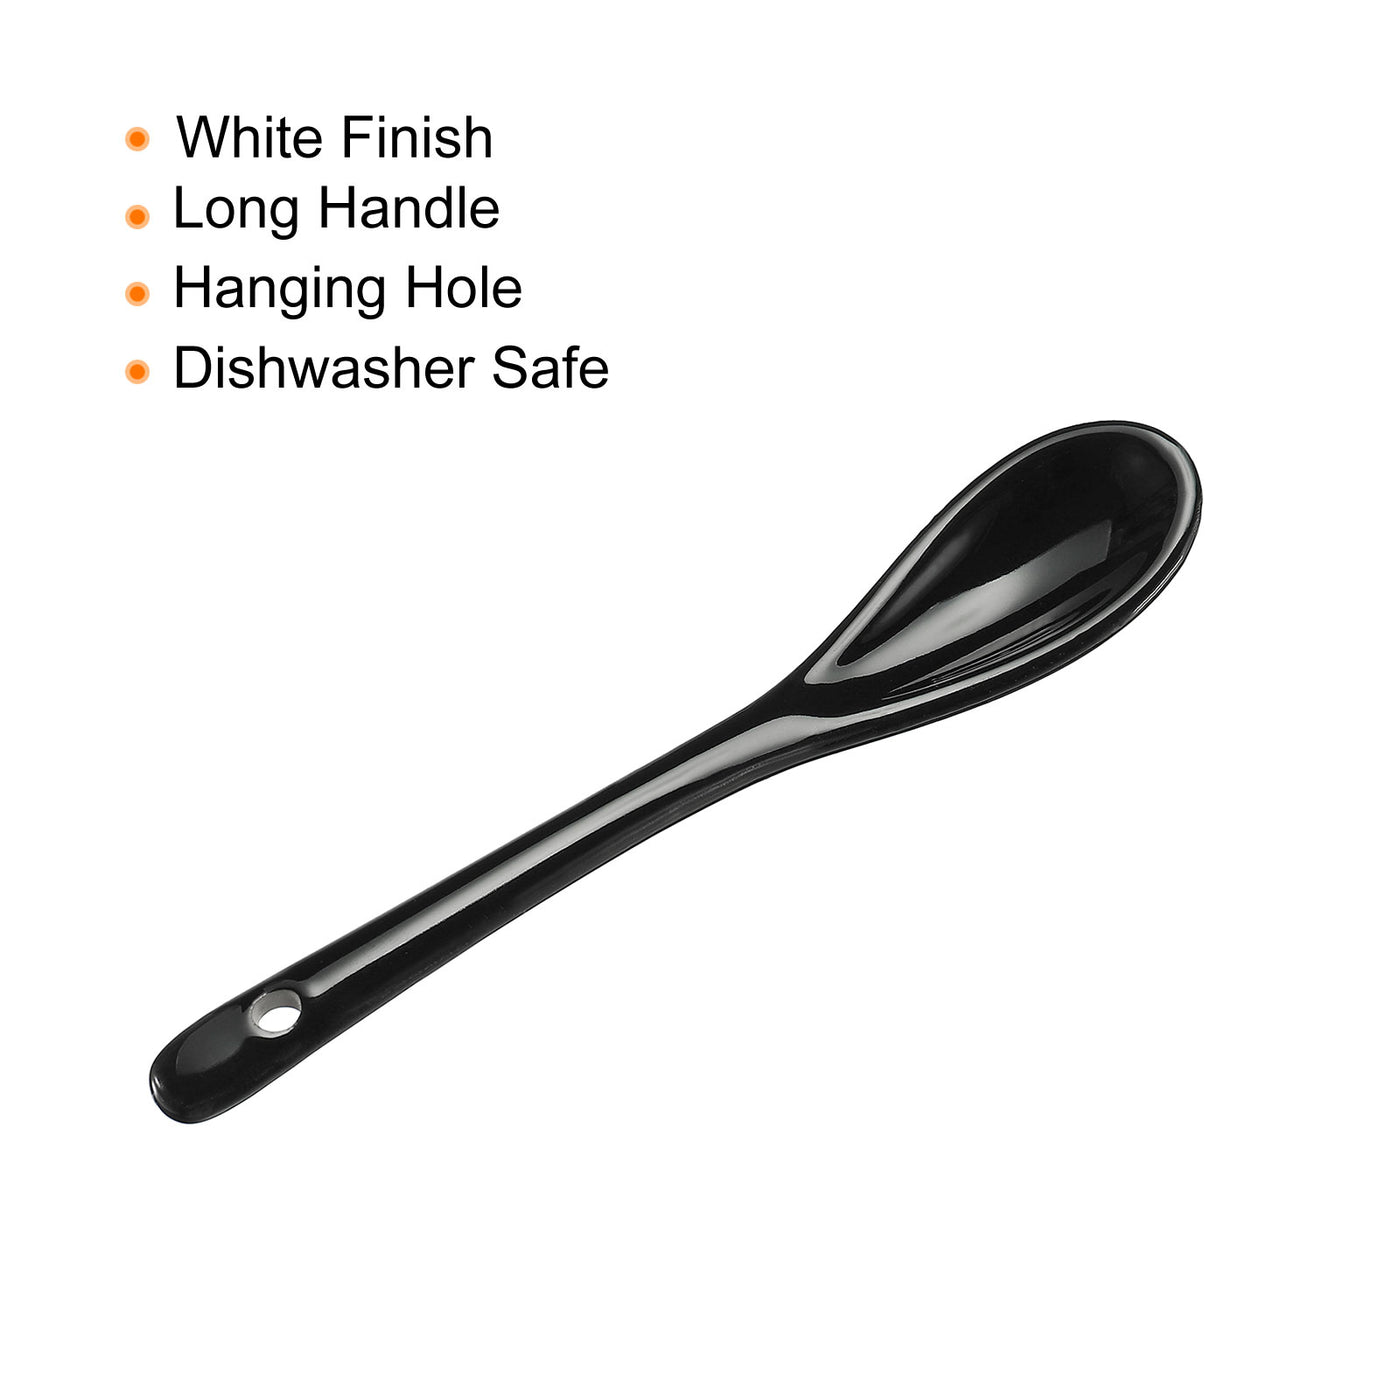 Harfington Ceramic Spoons Spoon Stirring Spoons for Restaurant